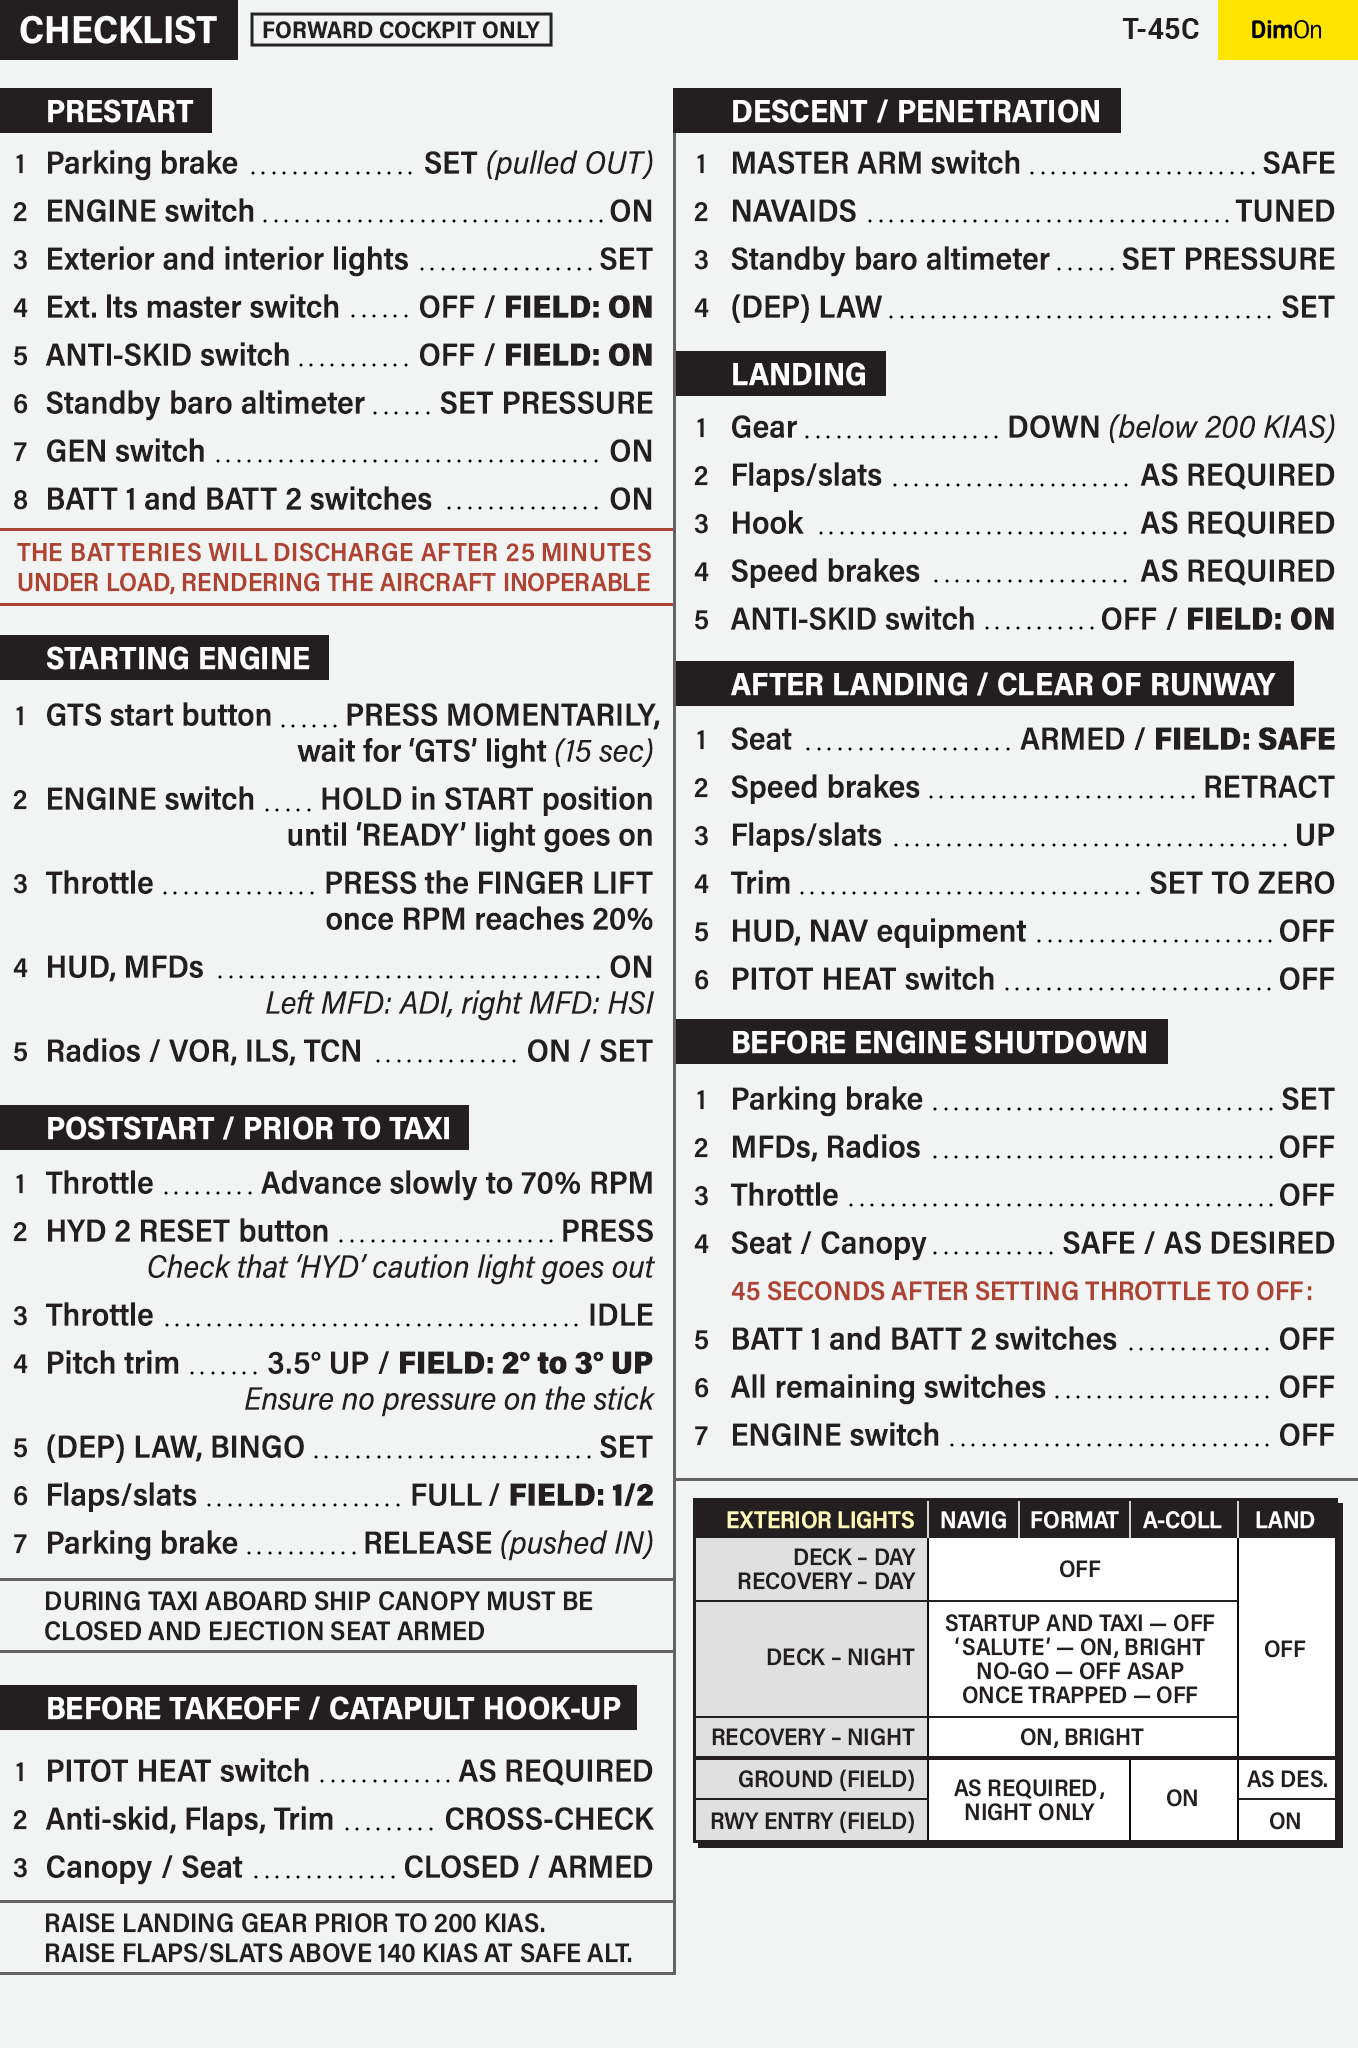 T-45C Checklist and Cockpit Diagram